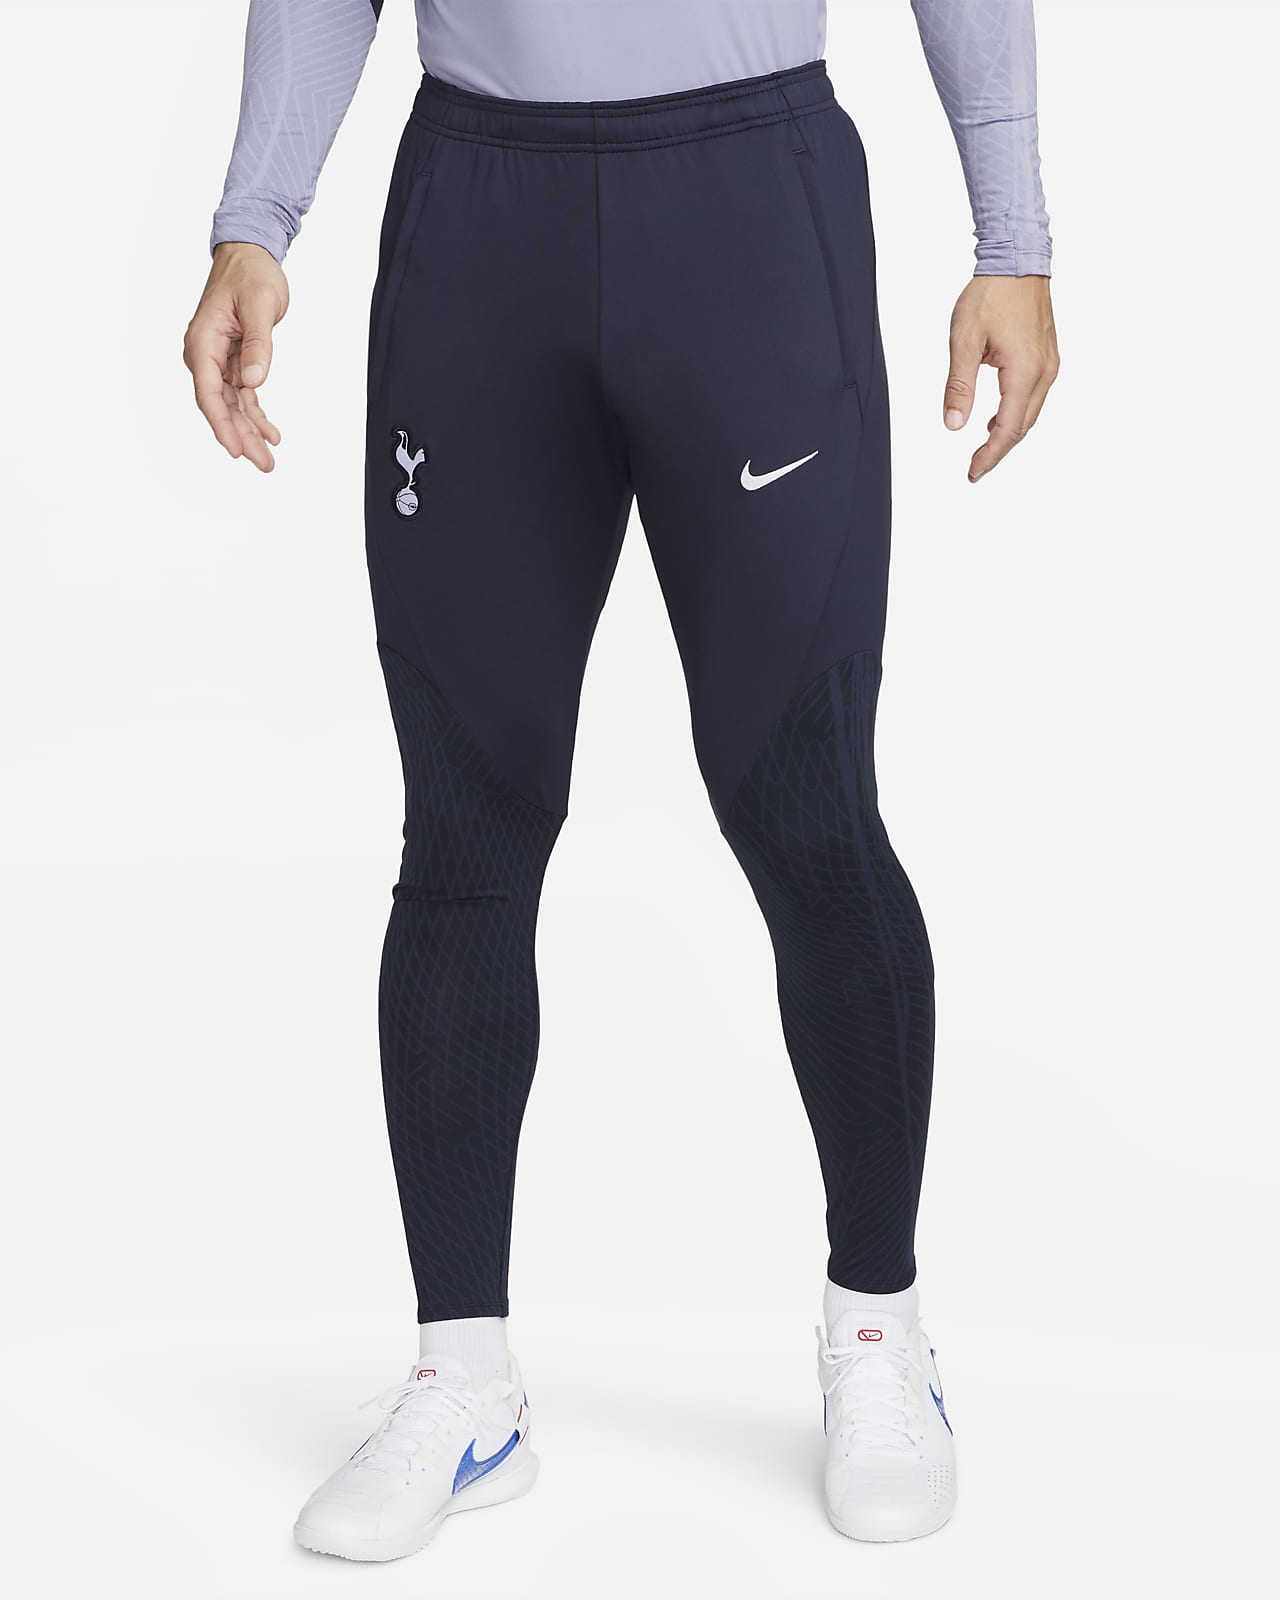 Nike Performance STRIKE PRO - Leggings - white black/white